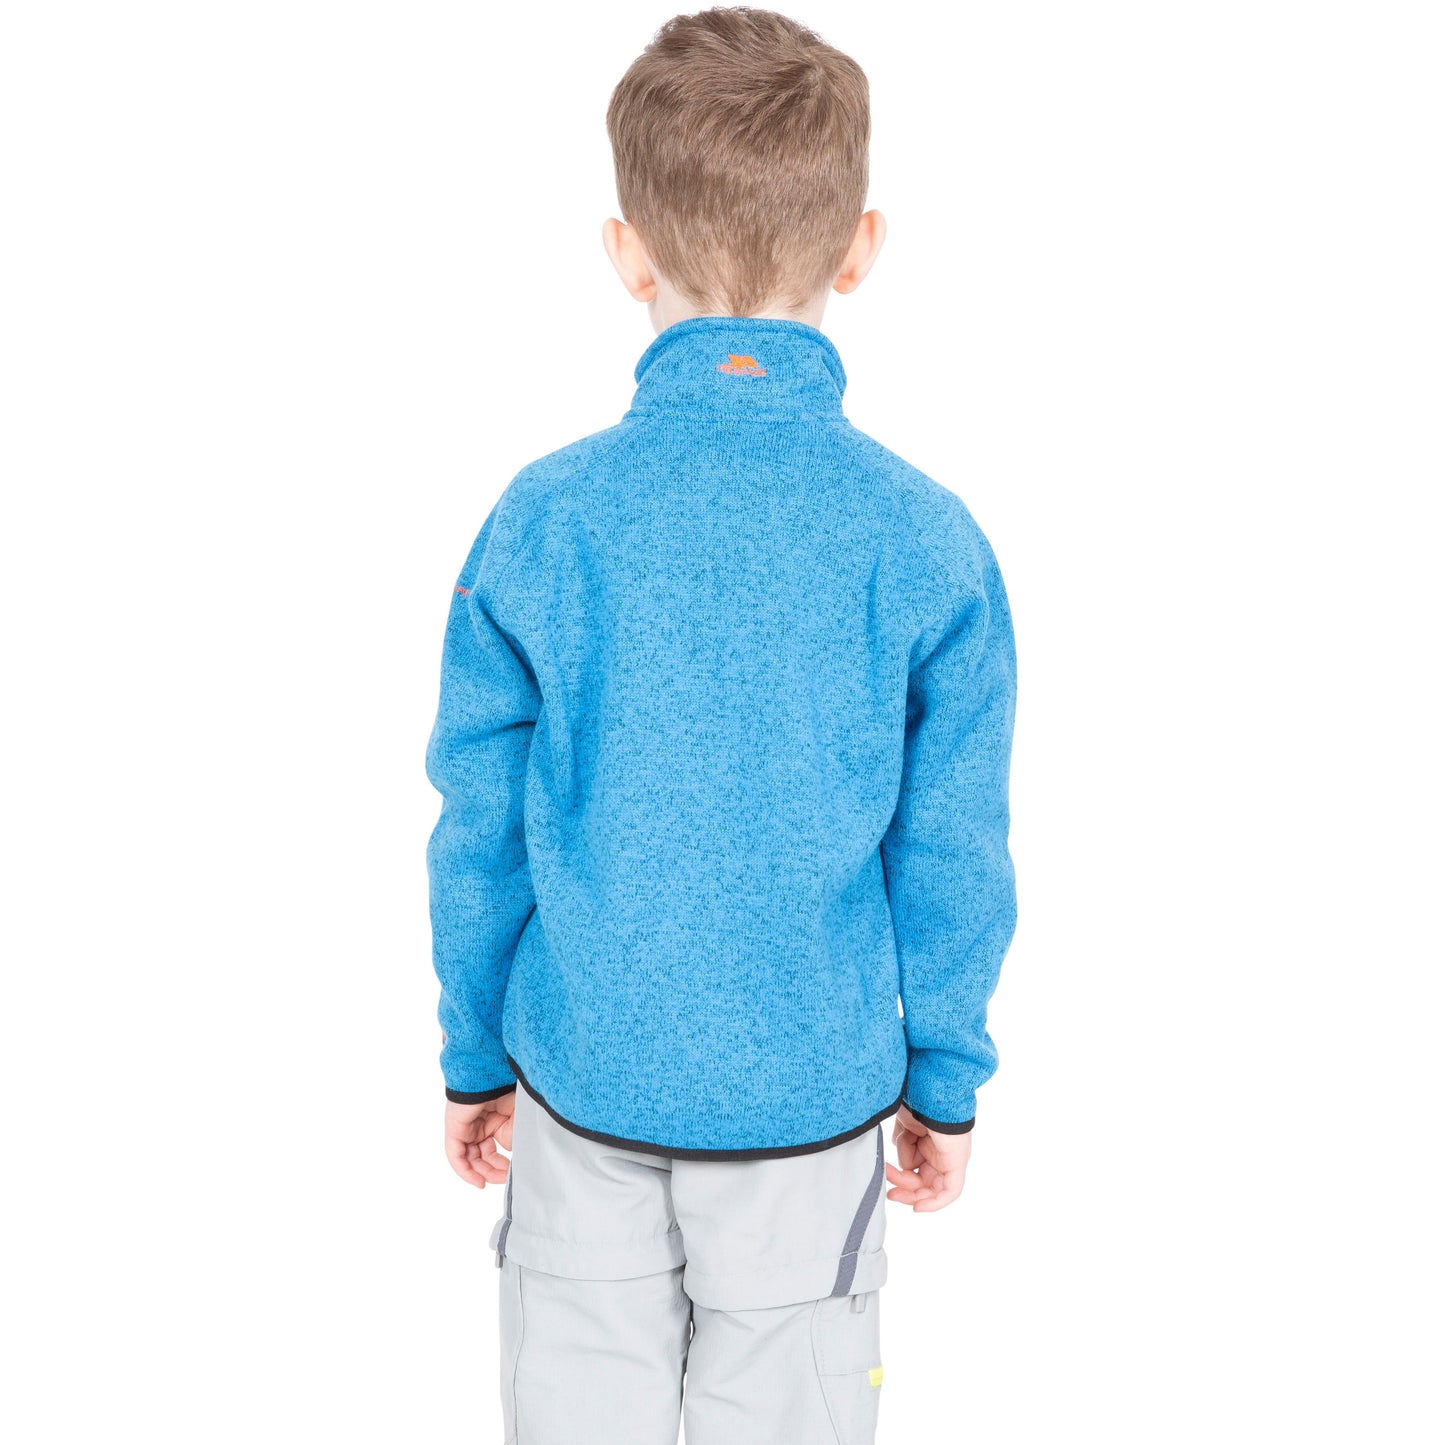 Mario Boys Full Zip Fleece Jacket - Blue Marl